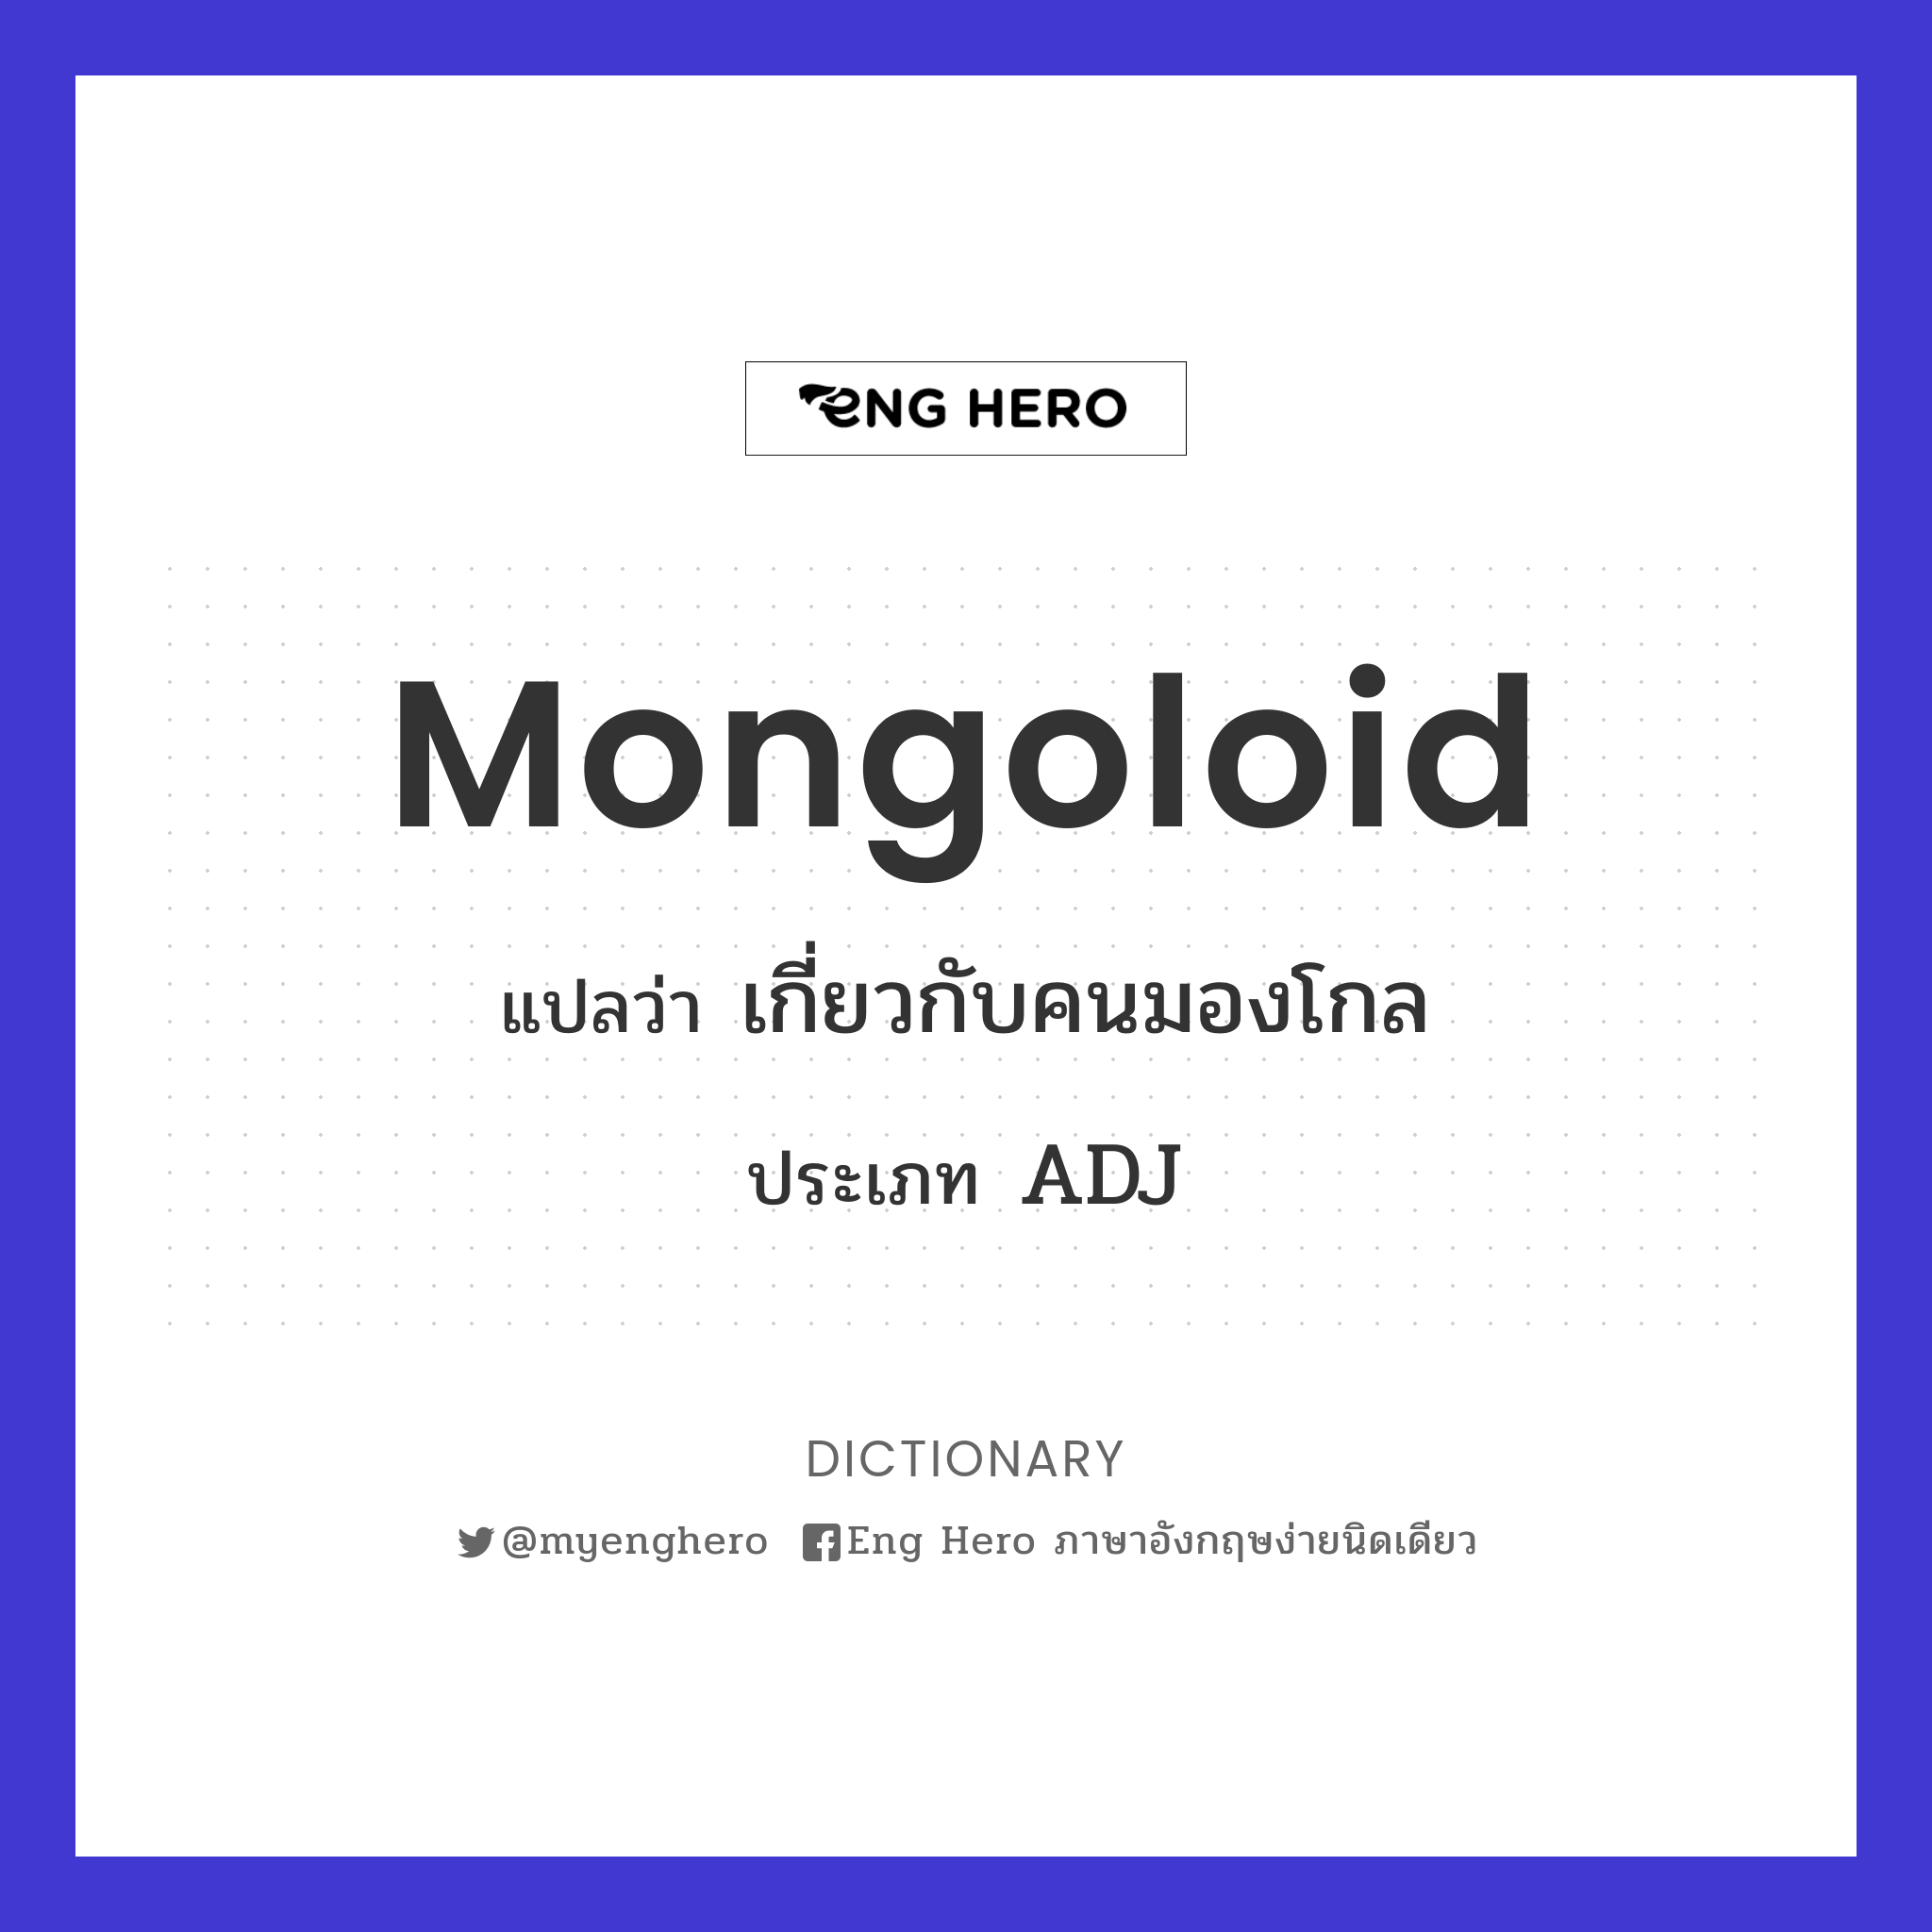 Mongoloid